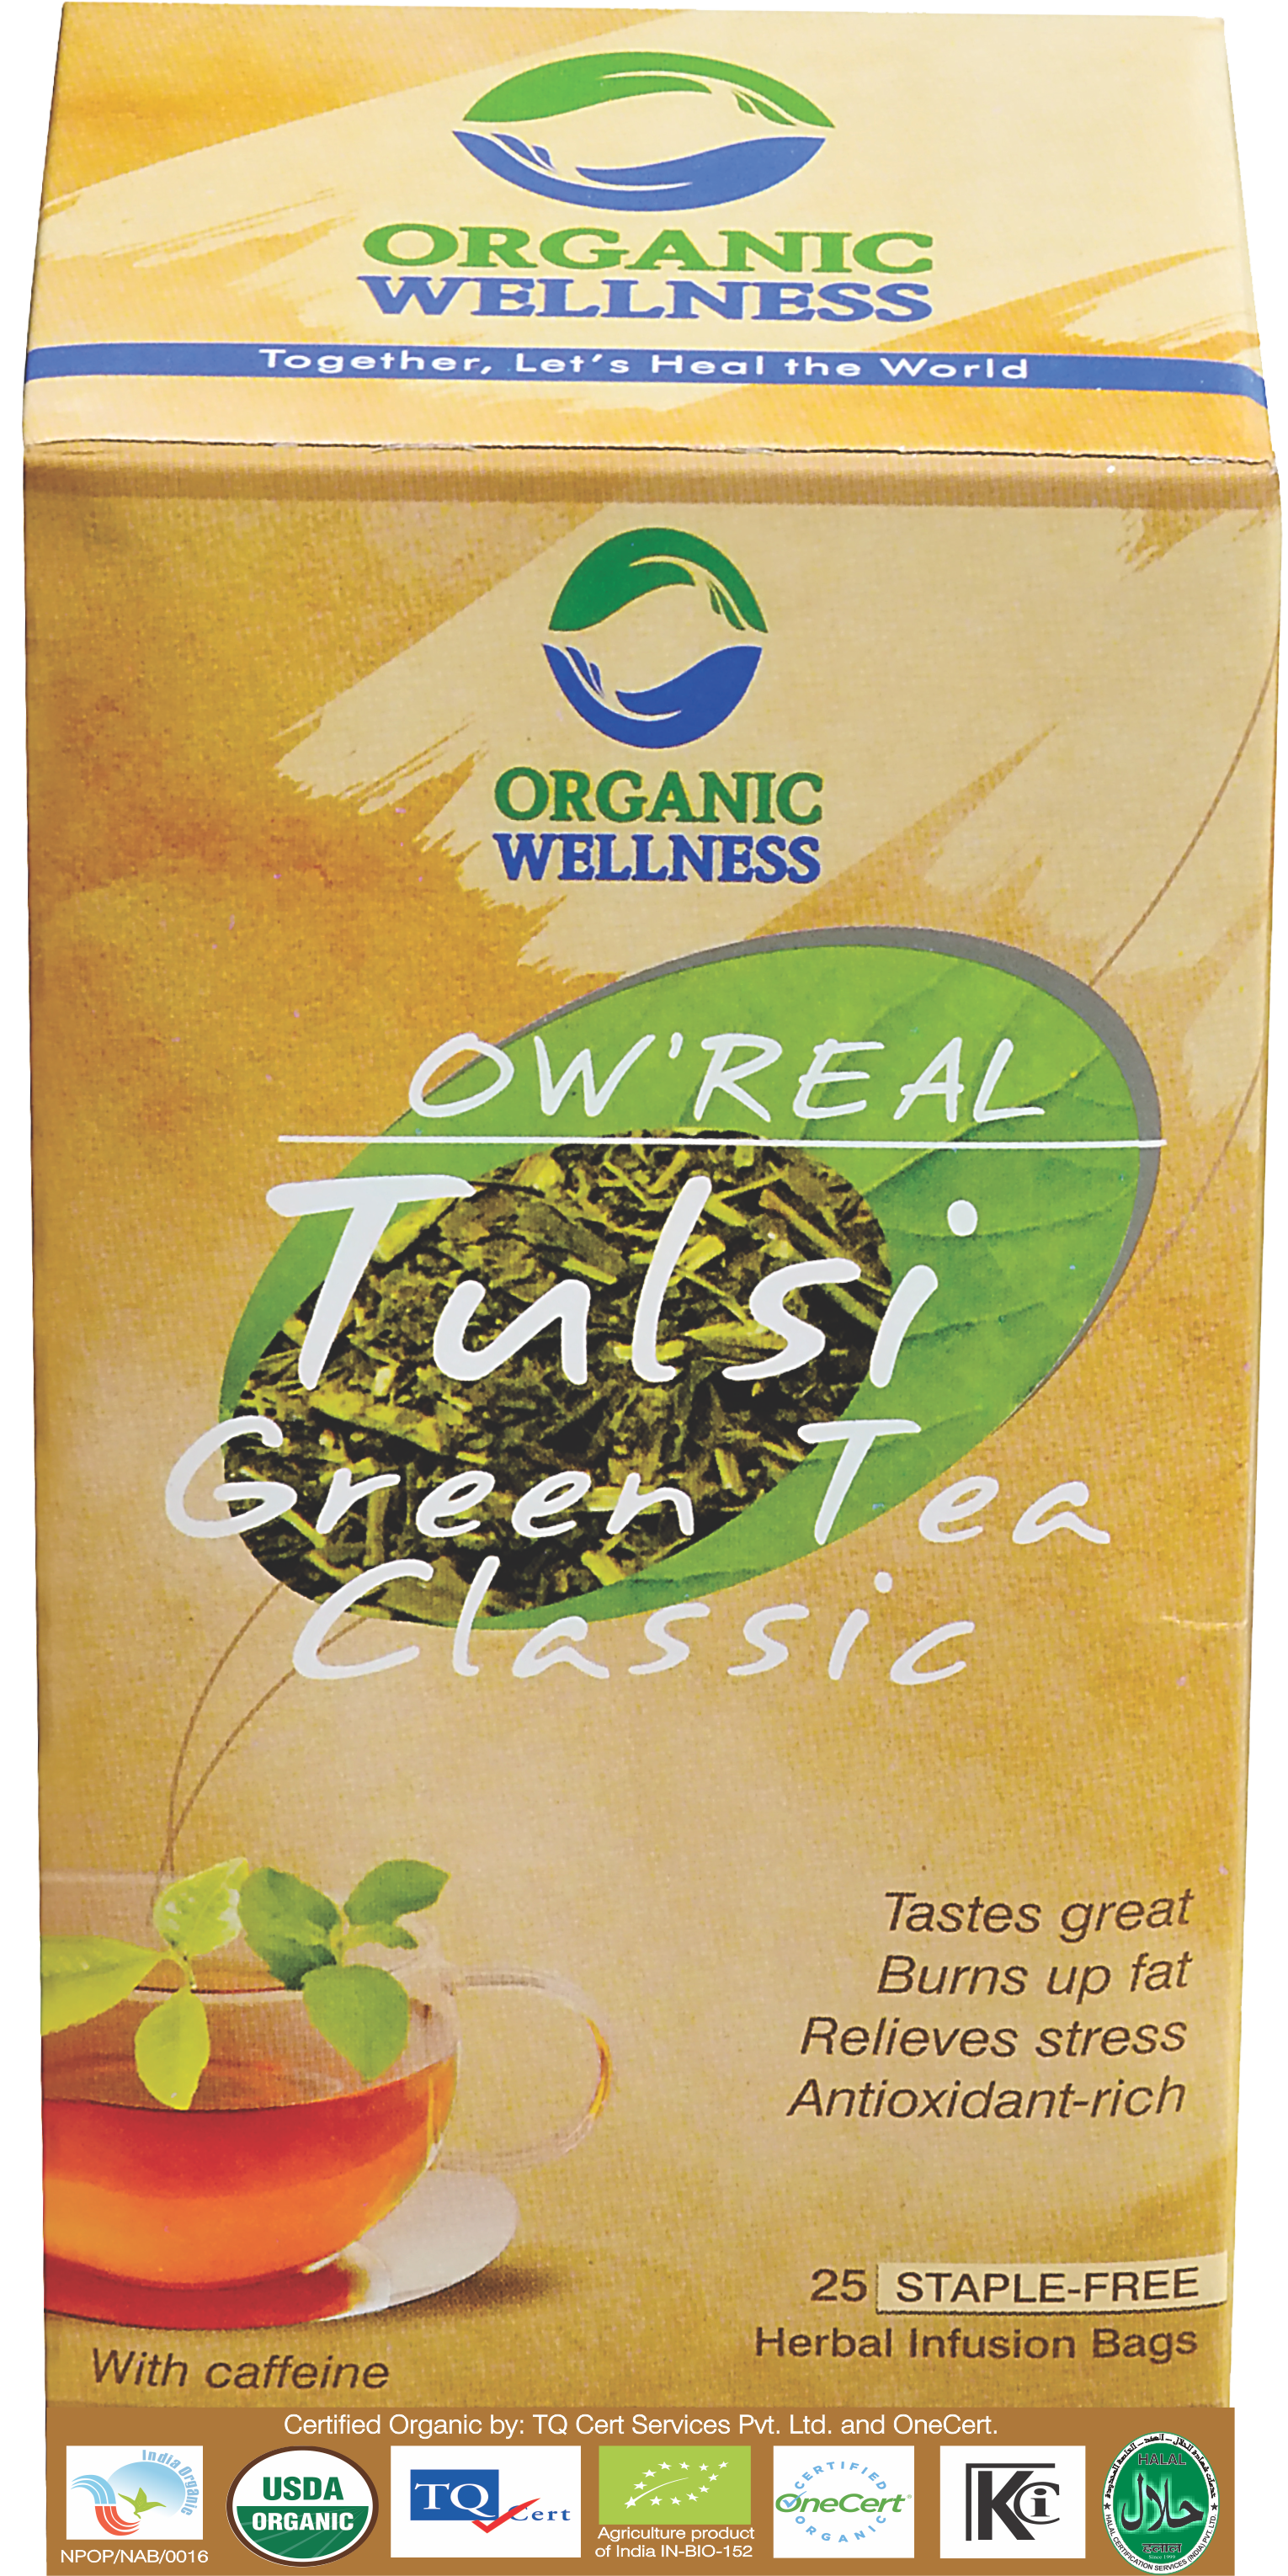 Buy Organic Wellness Real Tulsi Green Tea Saffron at Best Price Online